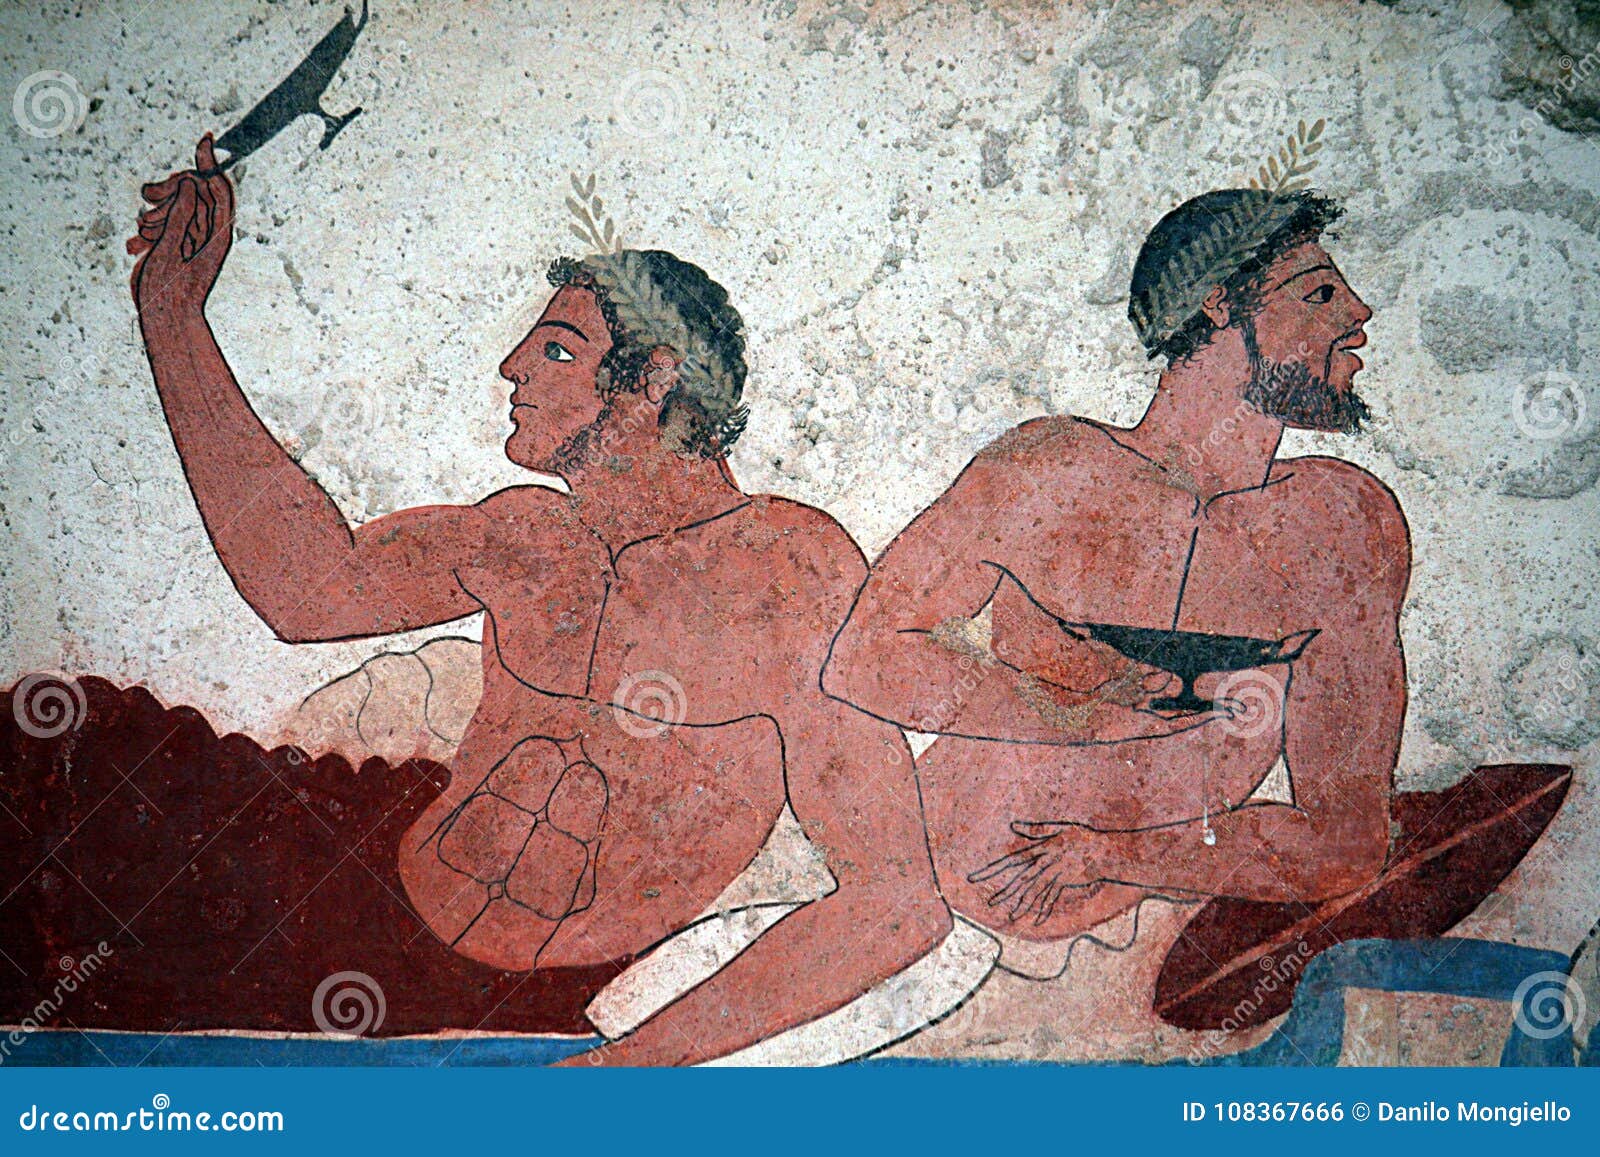 greek-men-painting-ancient-painting-greek-tomb-inside-archaeological-museum-paestum-italy-108367666.jpg